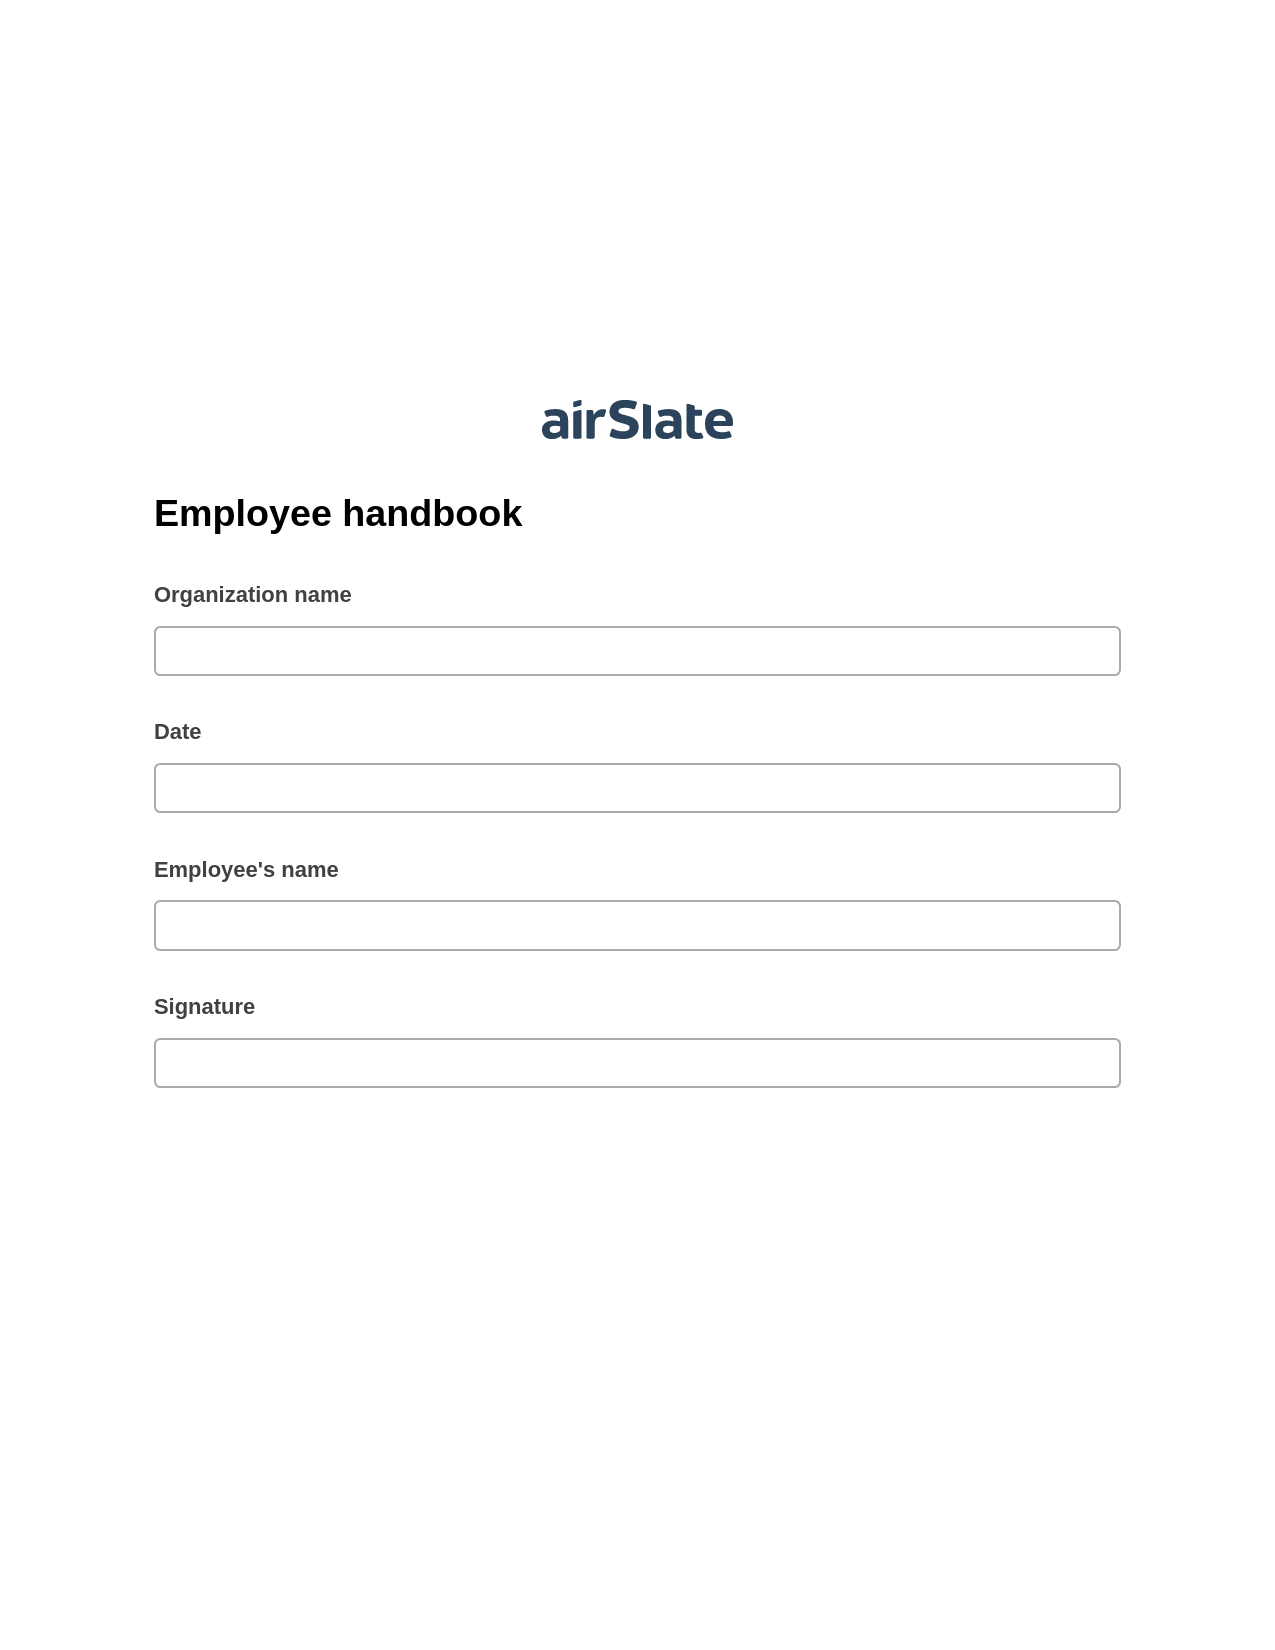 Multirole Employee handbook Pre-fill Slate from MS Dynamics 365 Records Bot, Update NetSuite Records Bot, Slack Two-Way Binding Bot